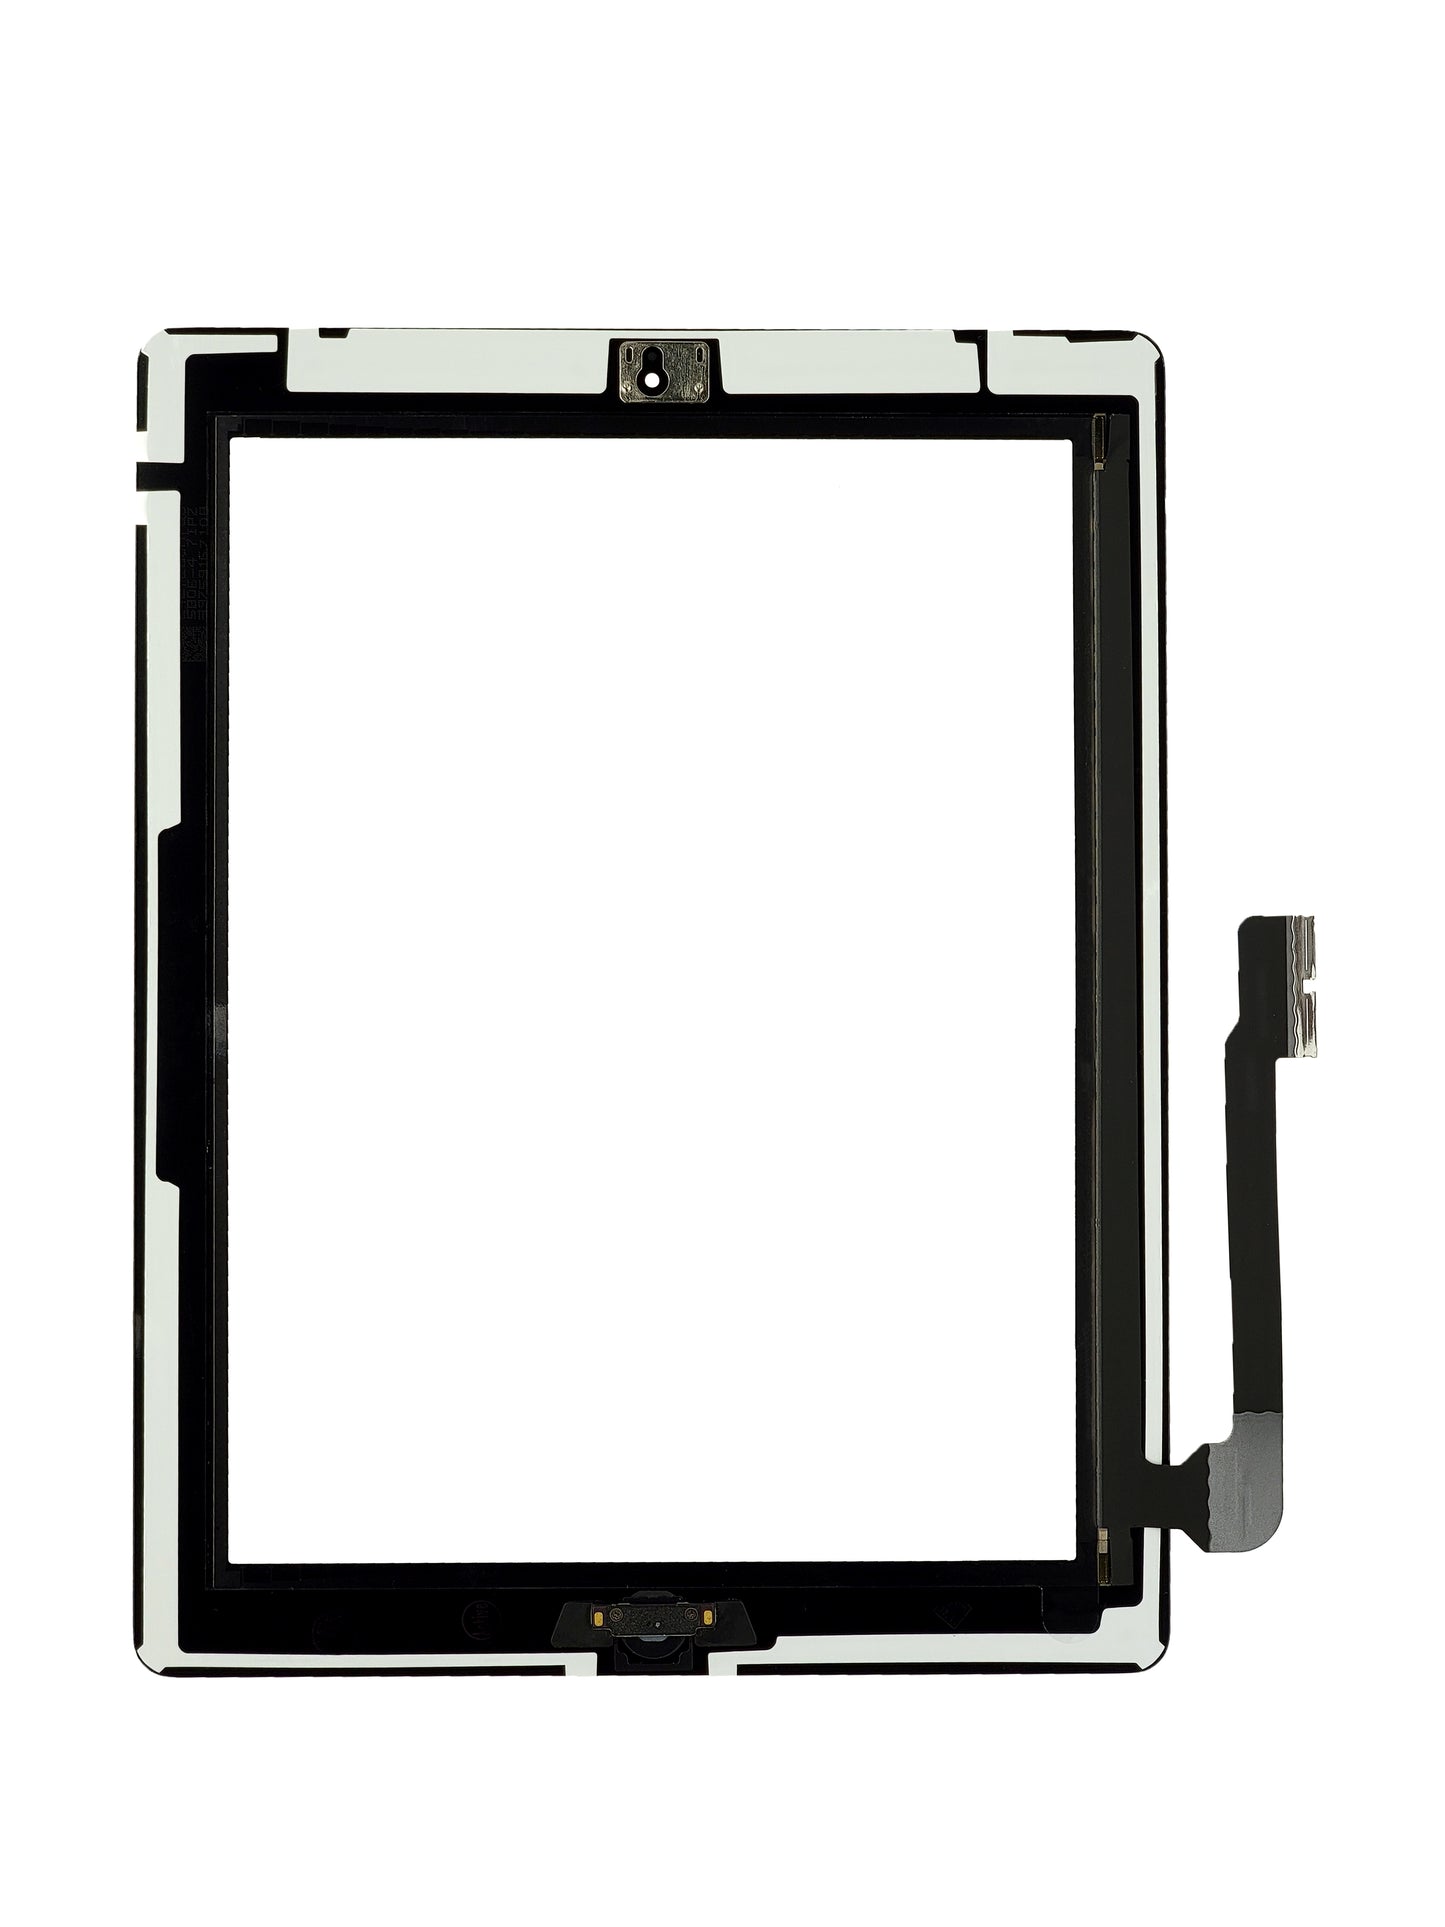 iPad 3 / iPad 4 Digitizer (Aftermarket) (Black)